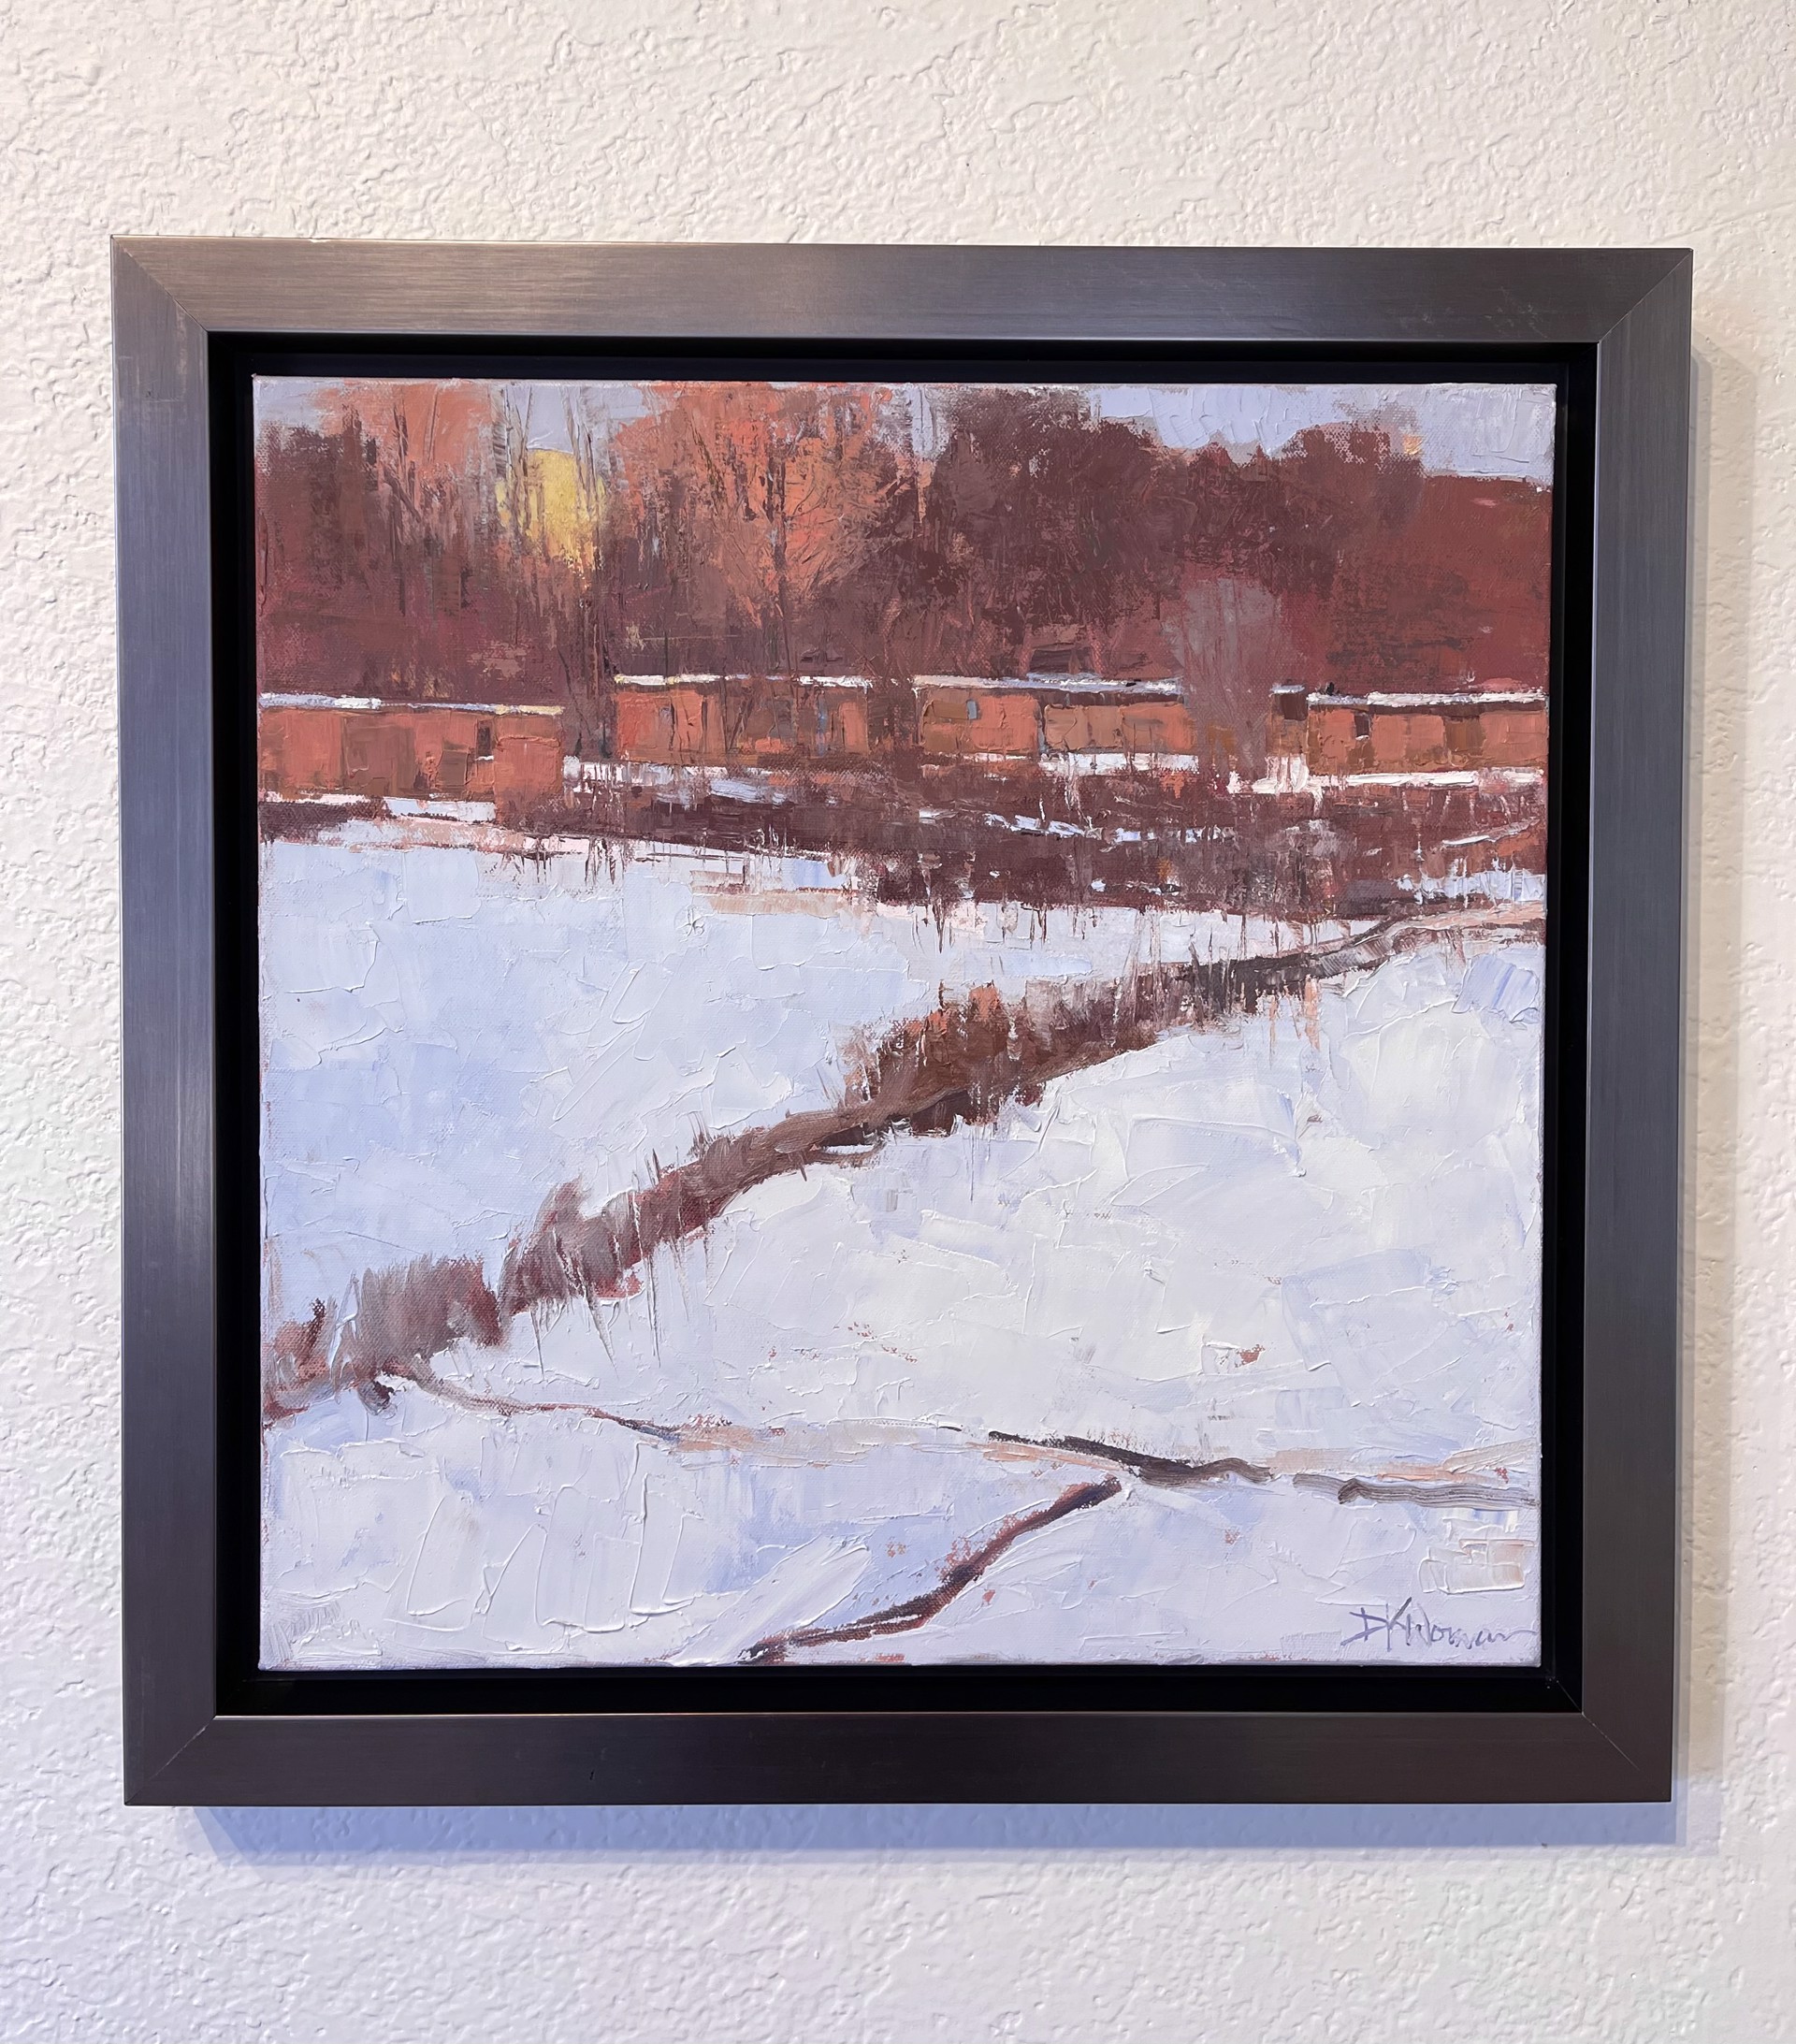 Warm Light on Snow by Dinah Worman